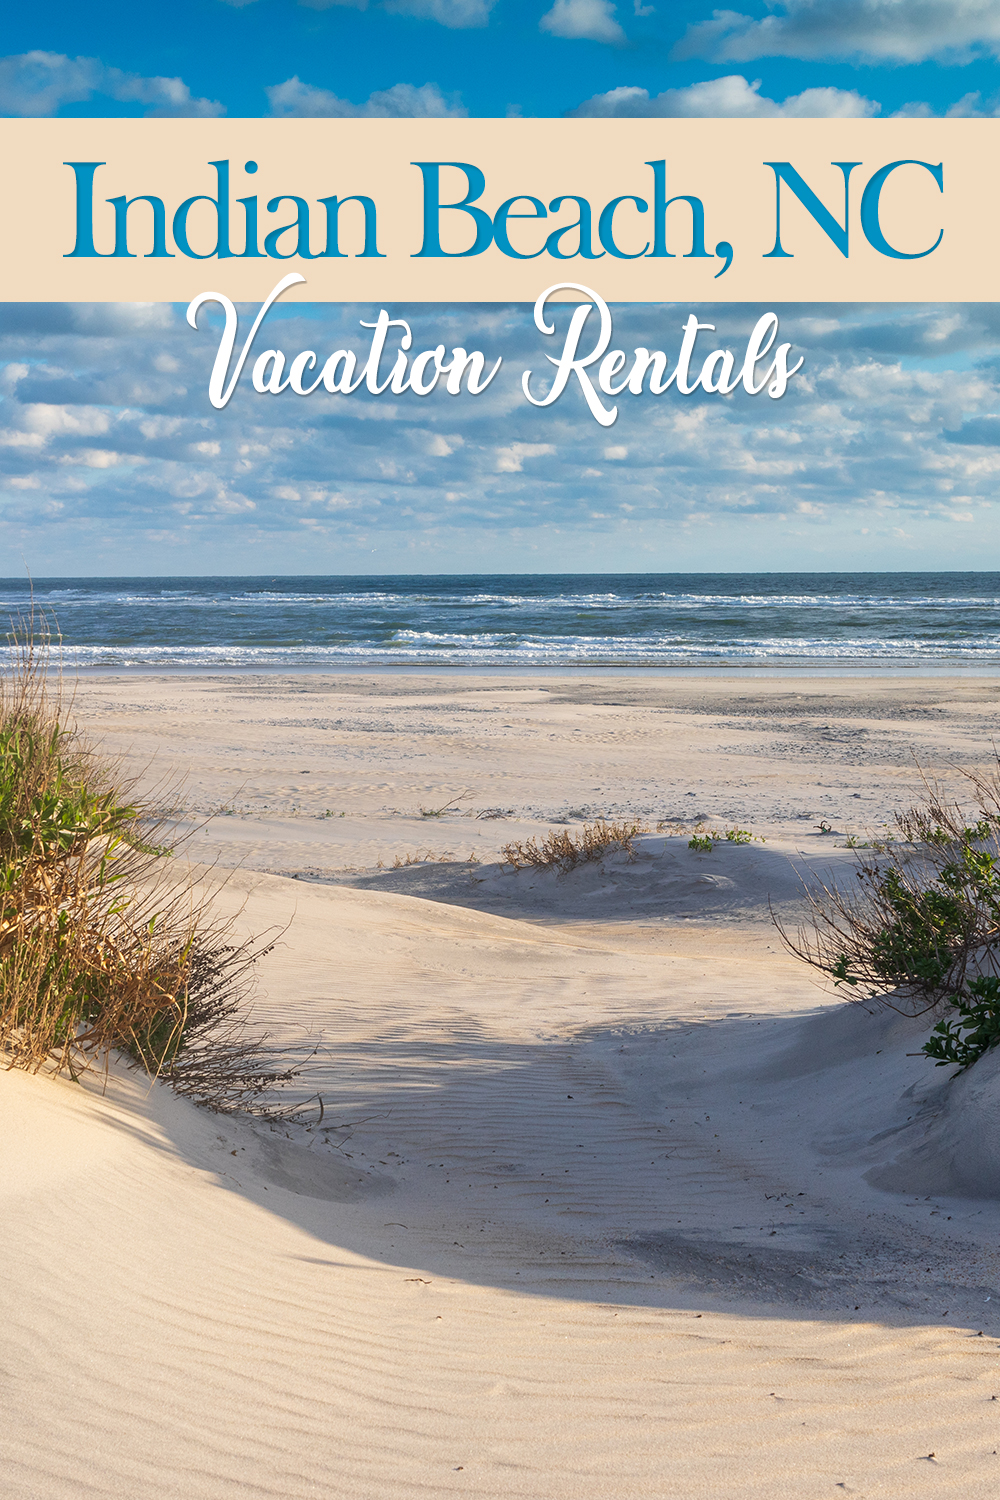 Indian Beach, NC Vacation Rentals